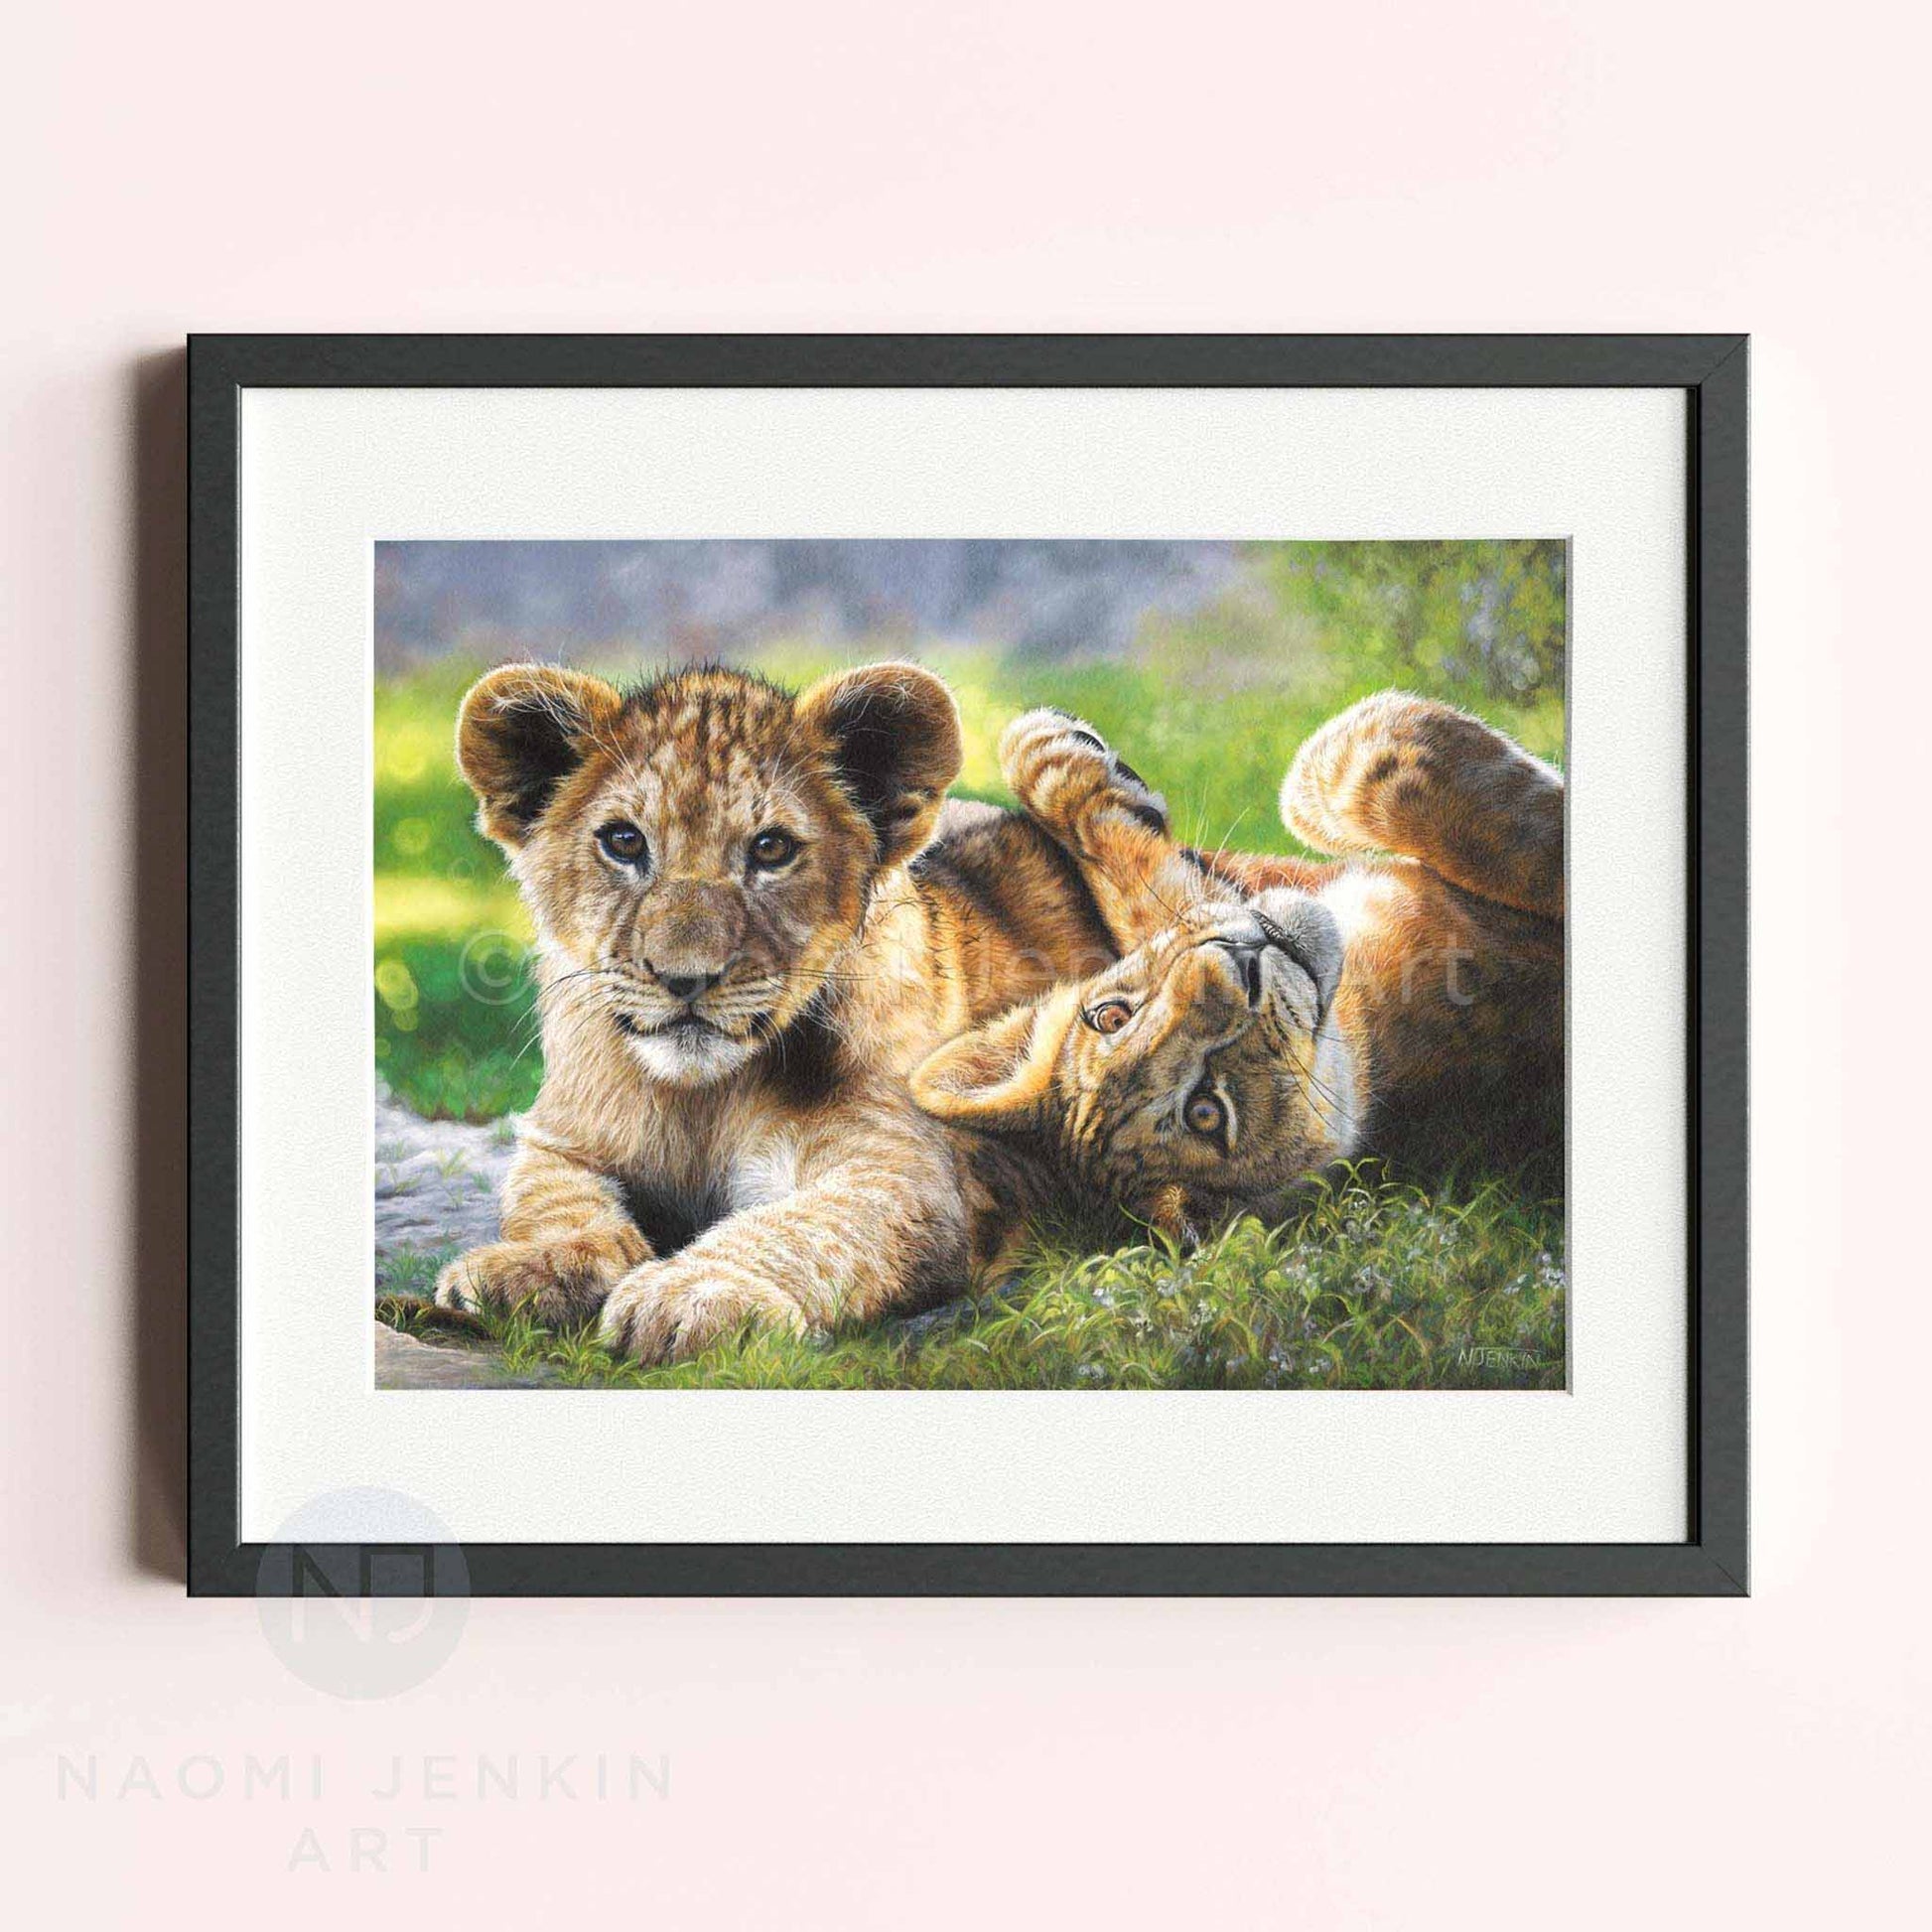 Lion art print by wildlife artist Naomi Jenkin. 